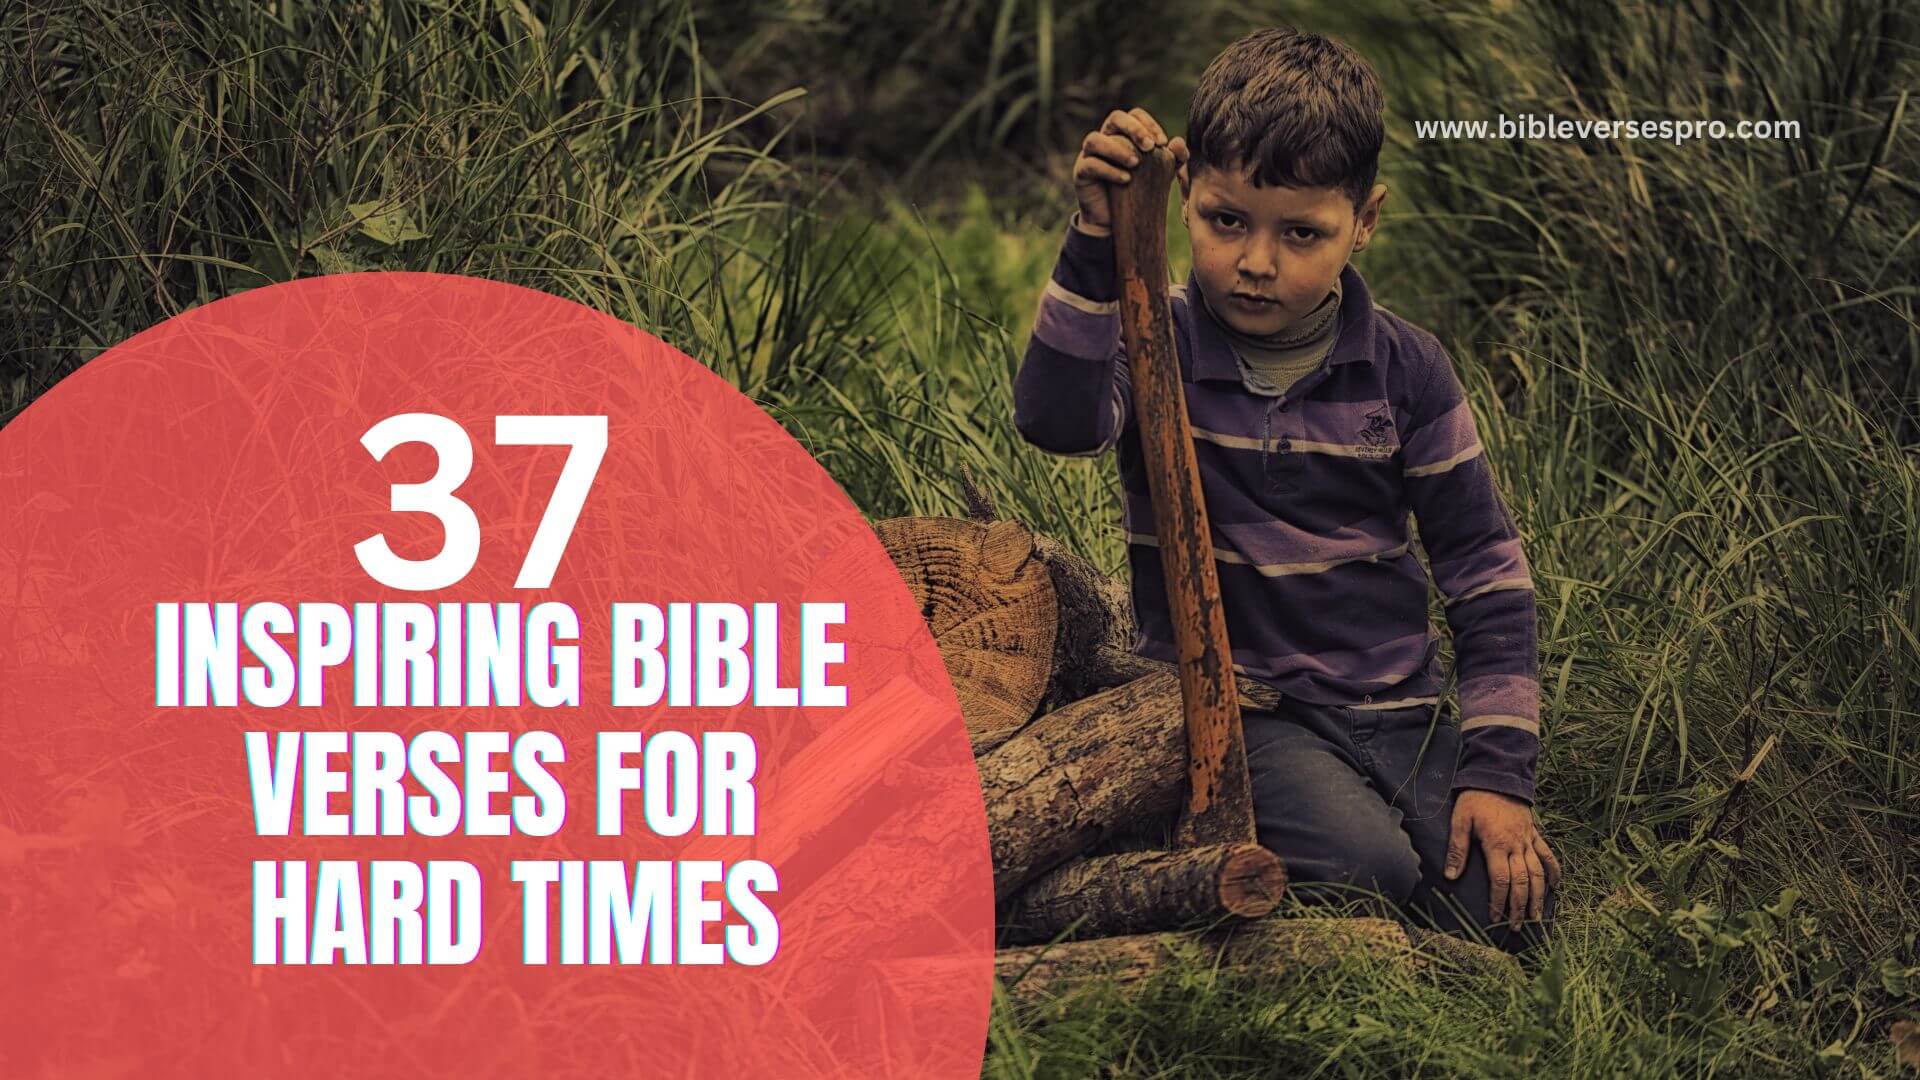 INSPIRING BIBLE VERSES FOR HARD TIMES (1)